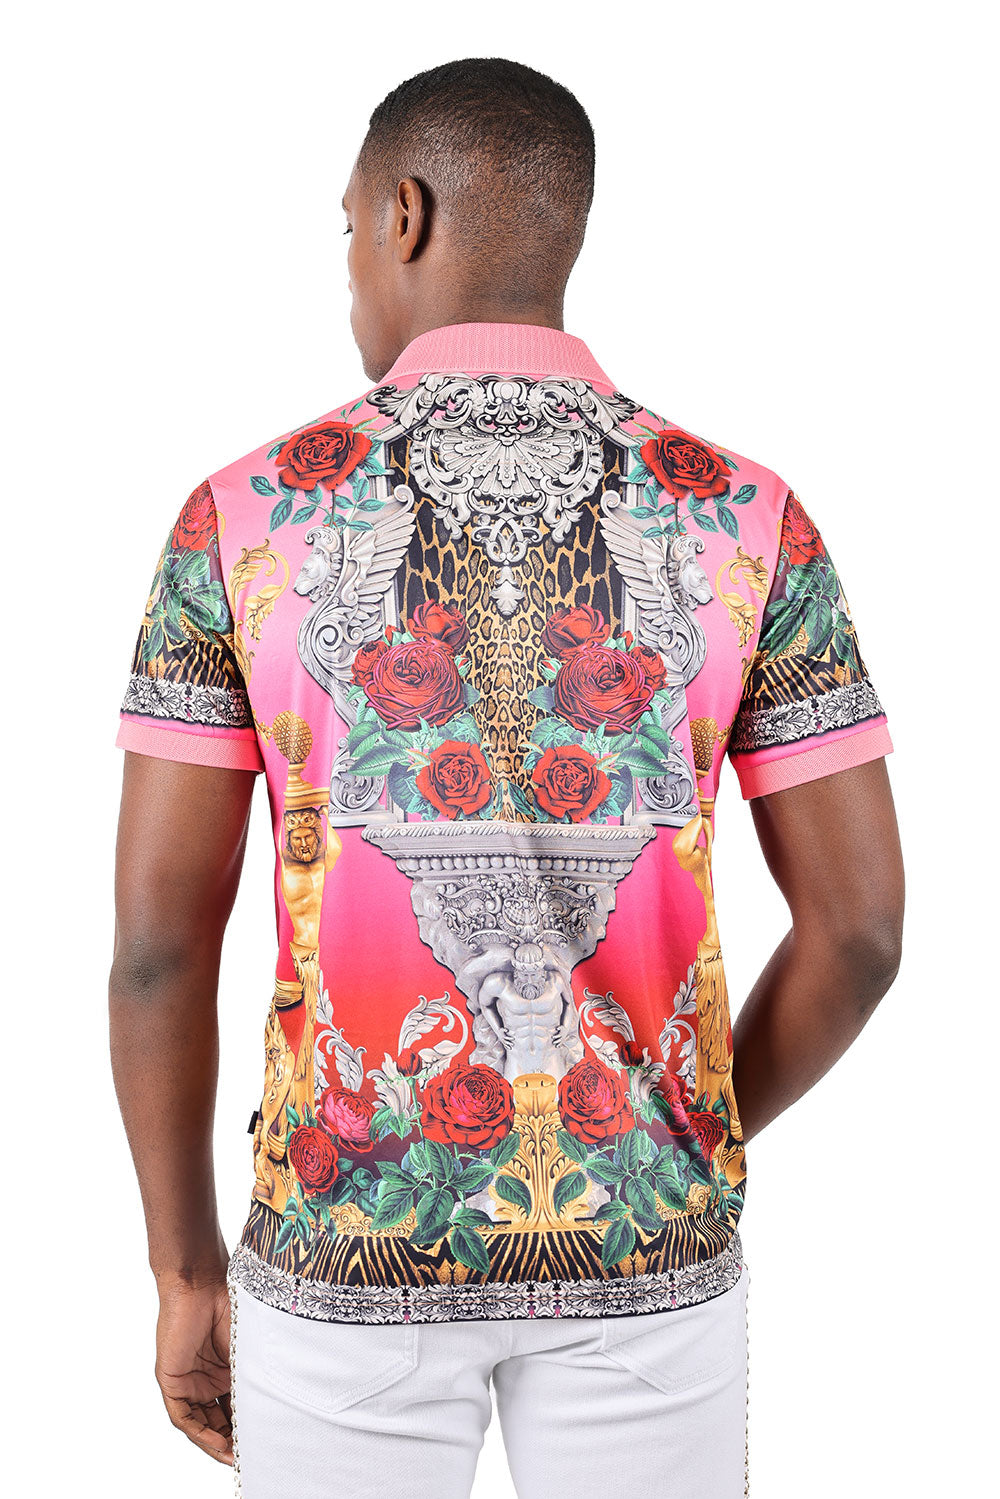 Barabas men's Floral Rose Leopard Prints Graphic Tee Polo Shirts 3PSP18 Pink